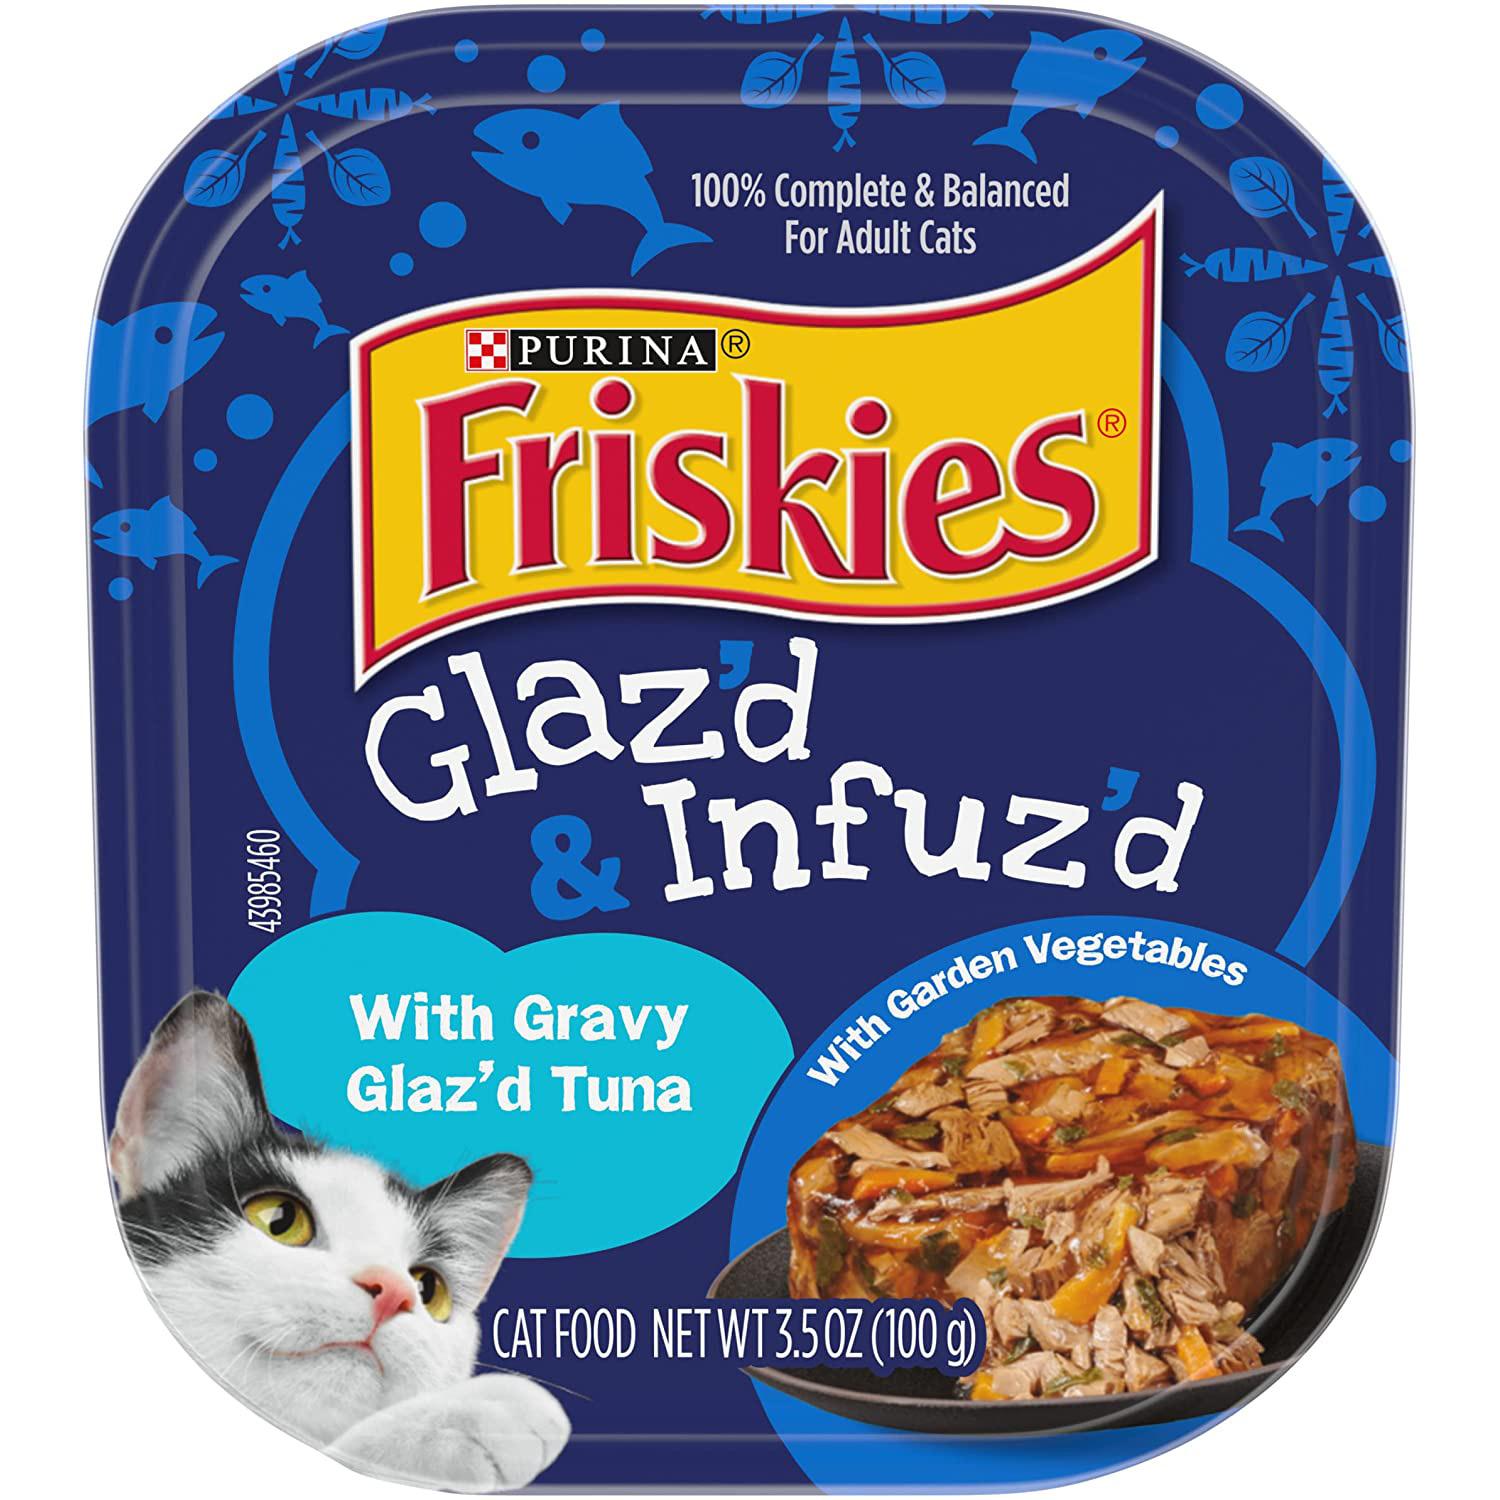 12 Purina Friskies Gravy Wet Cat Food for $6.67 Shipped